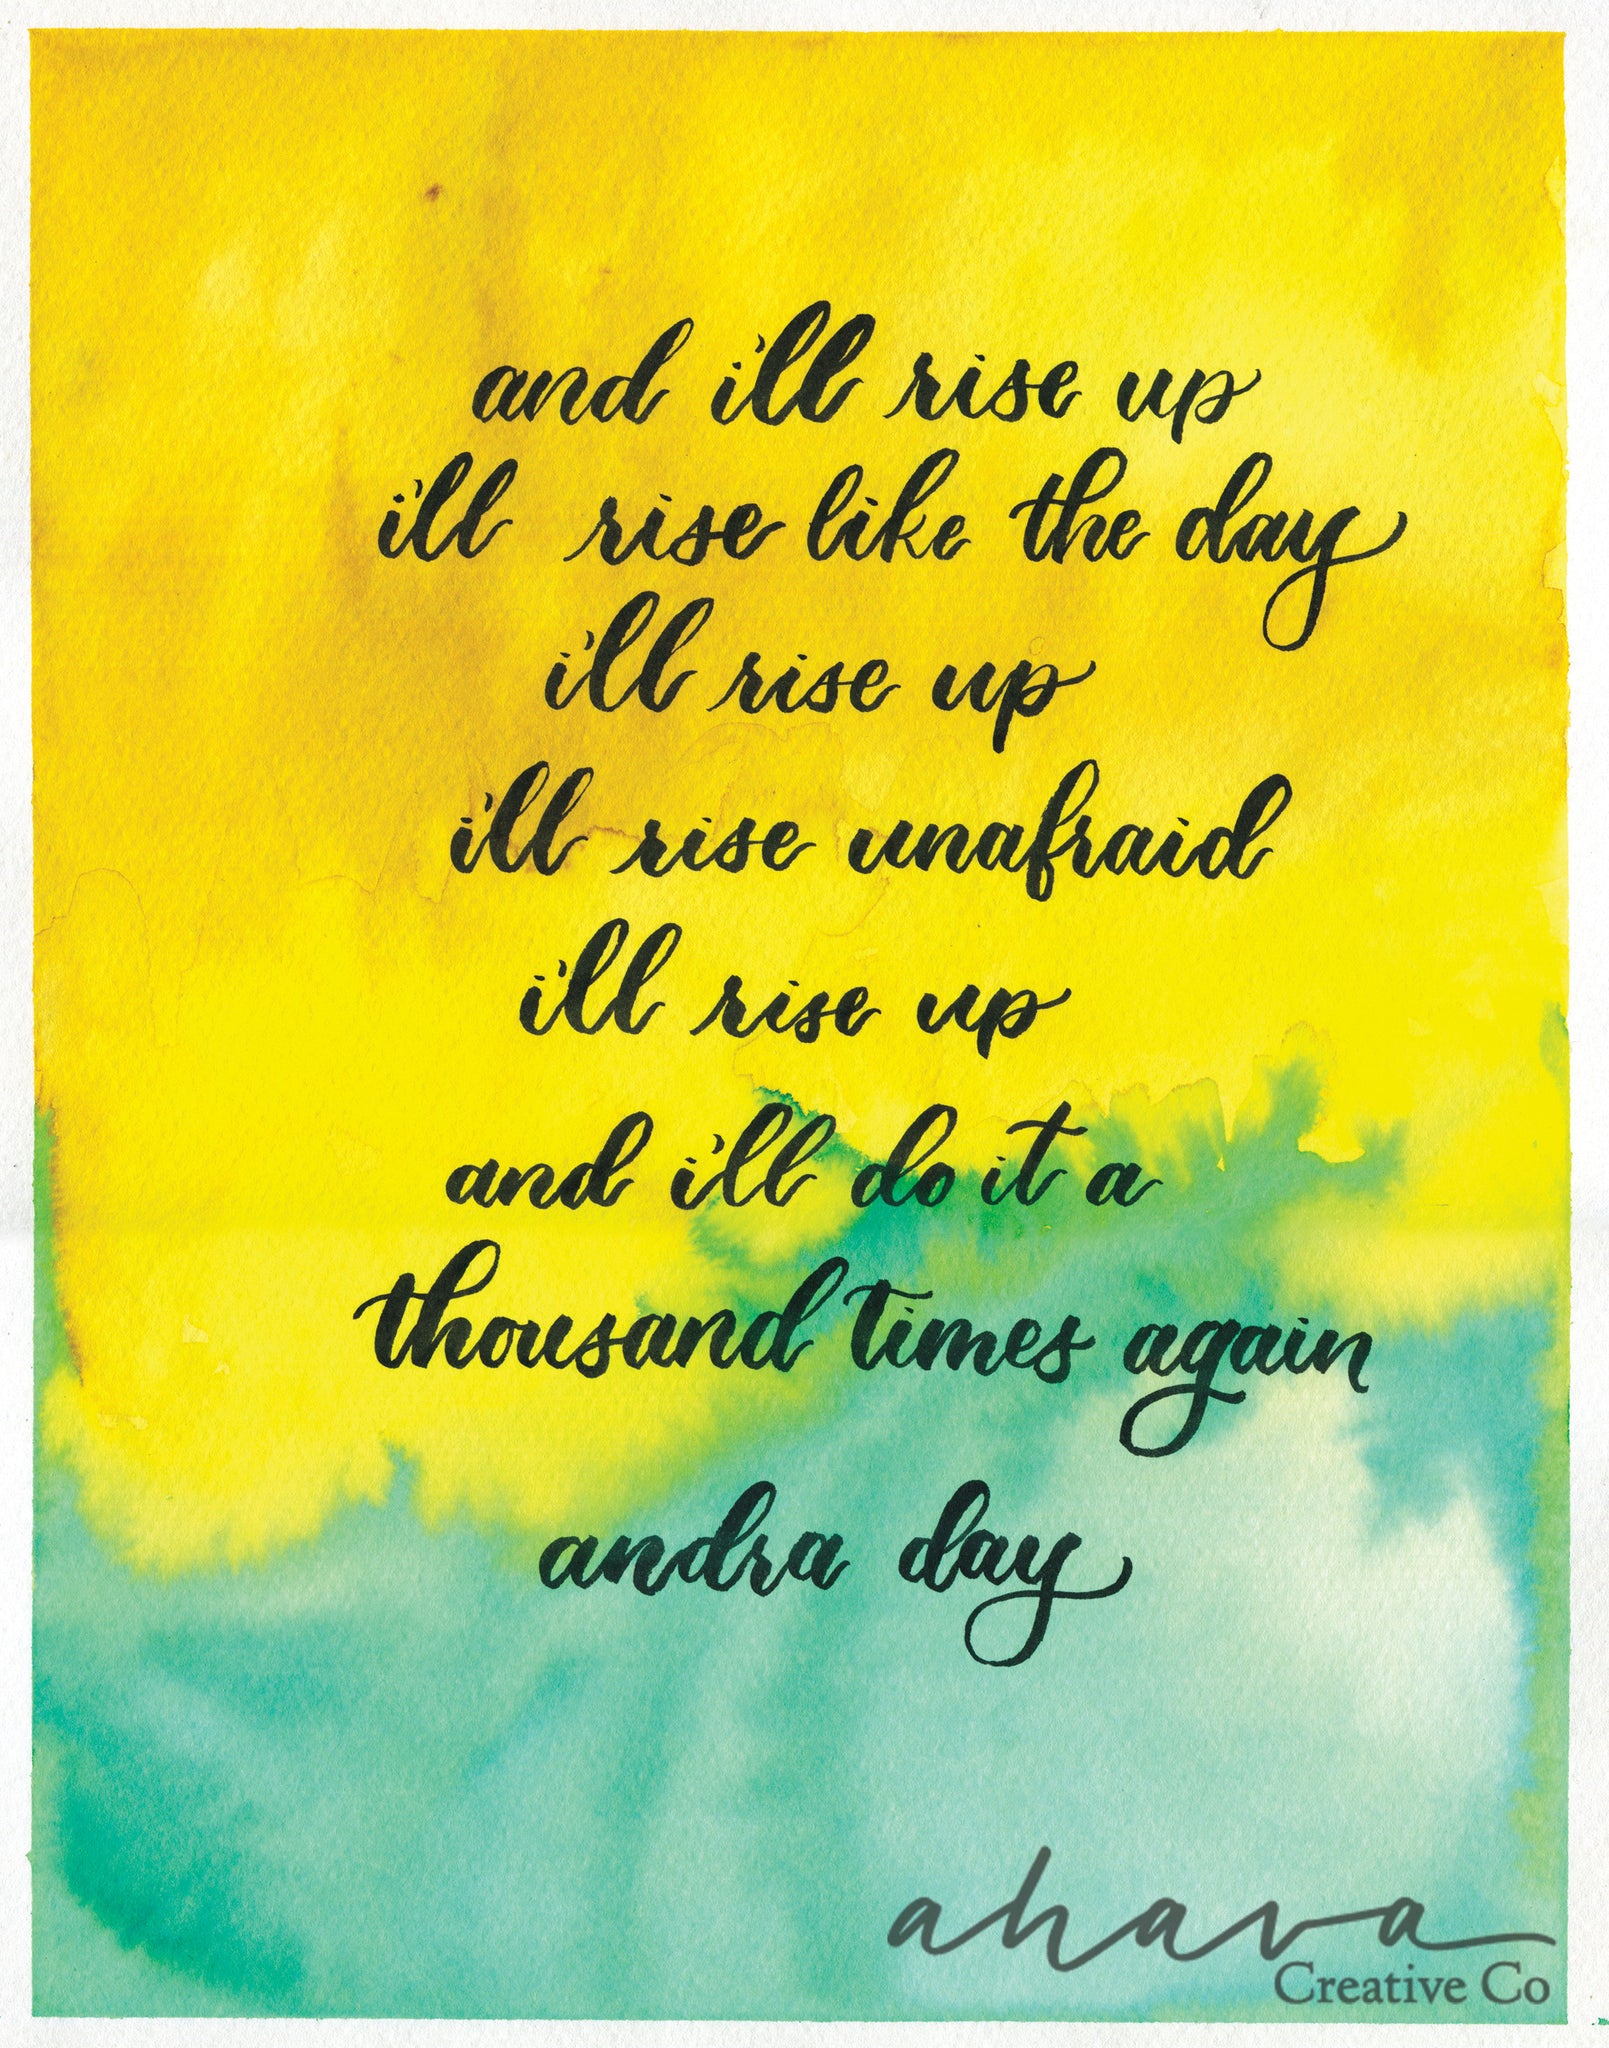 lyrics rise up andra day